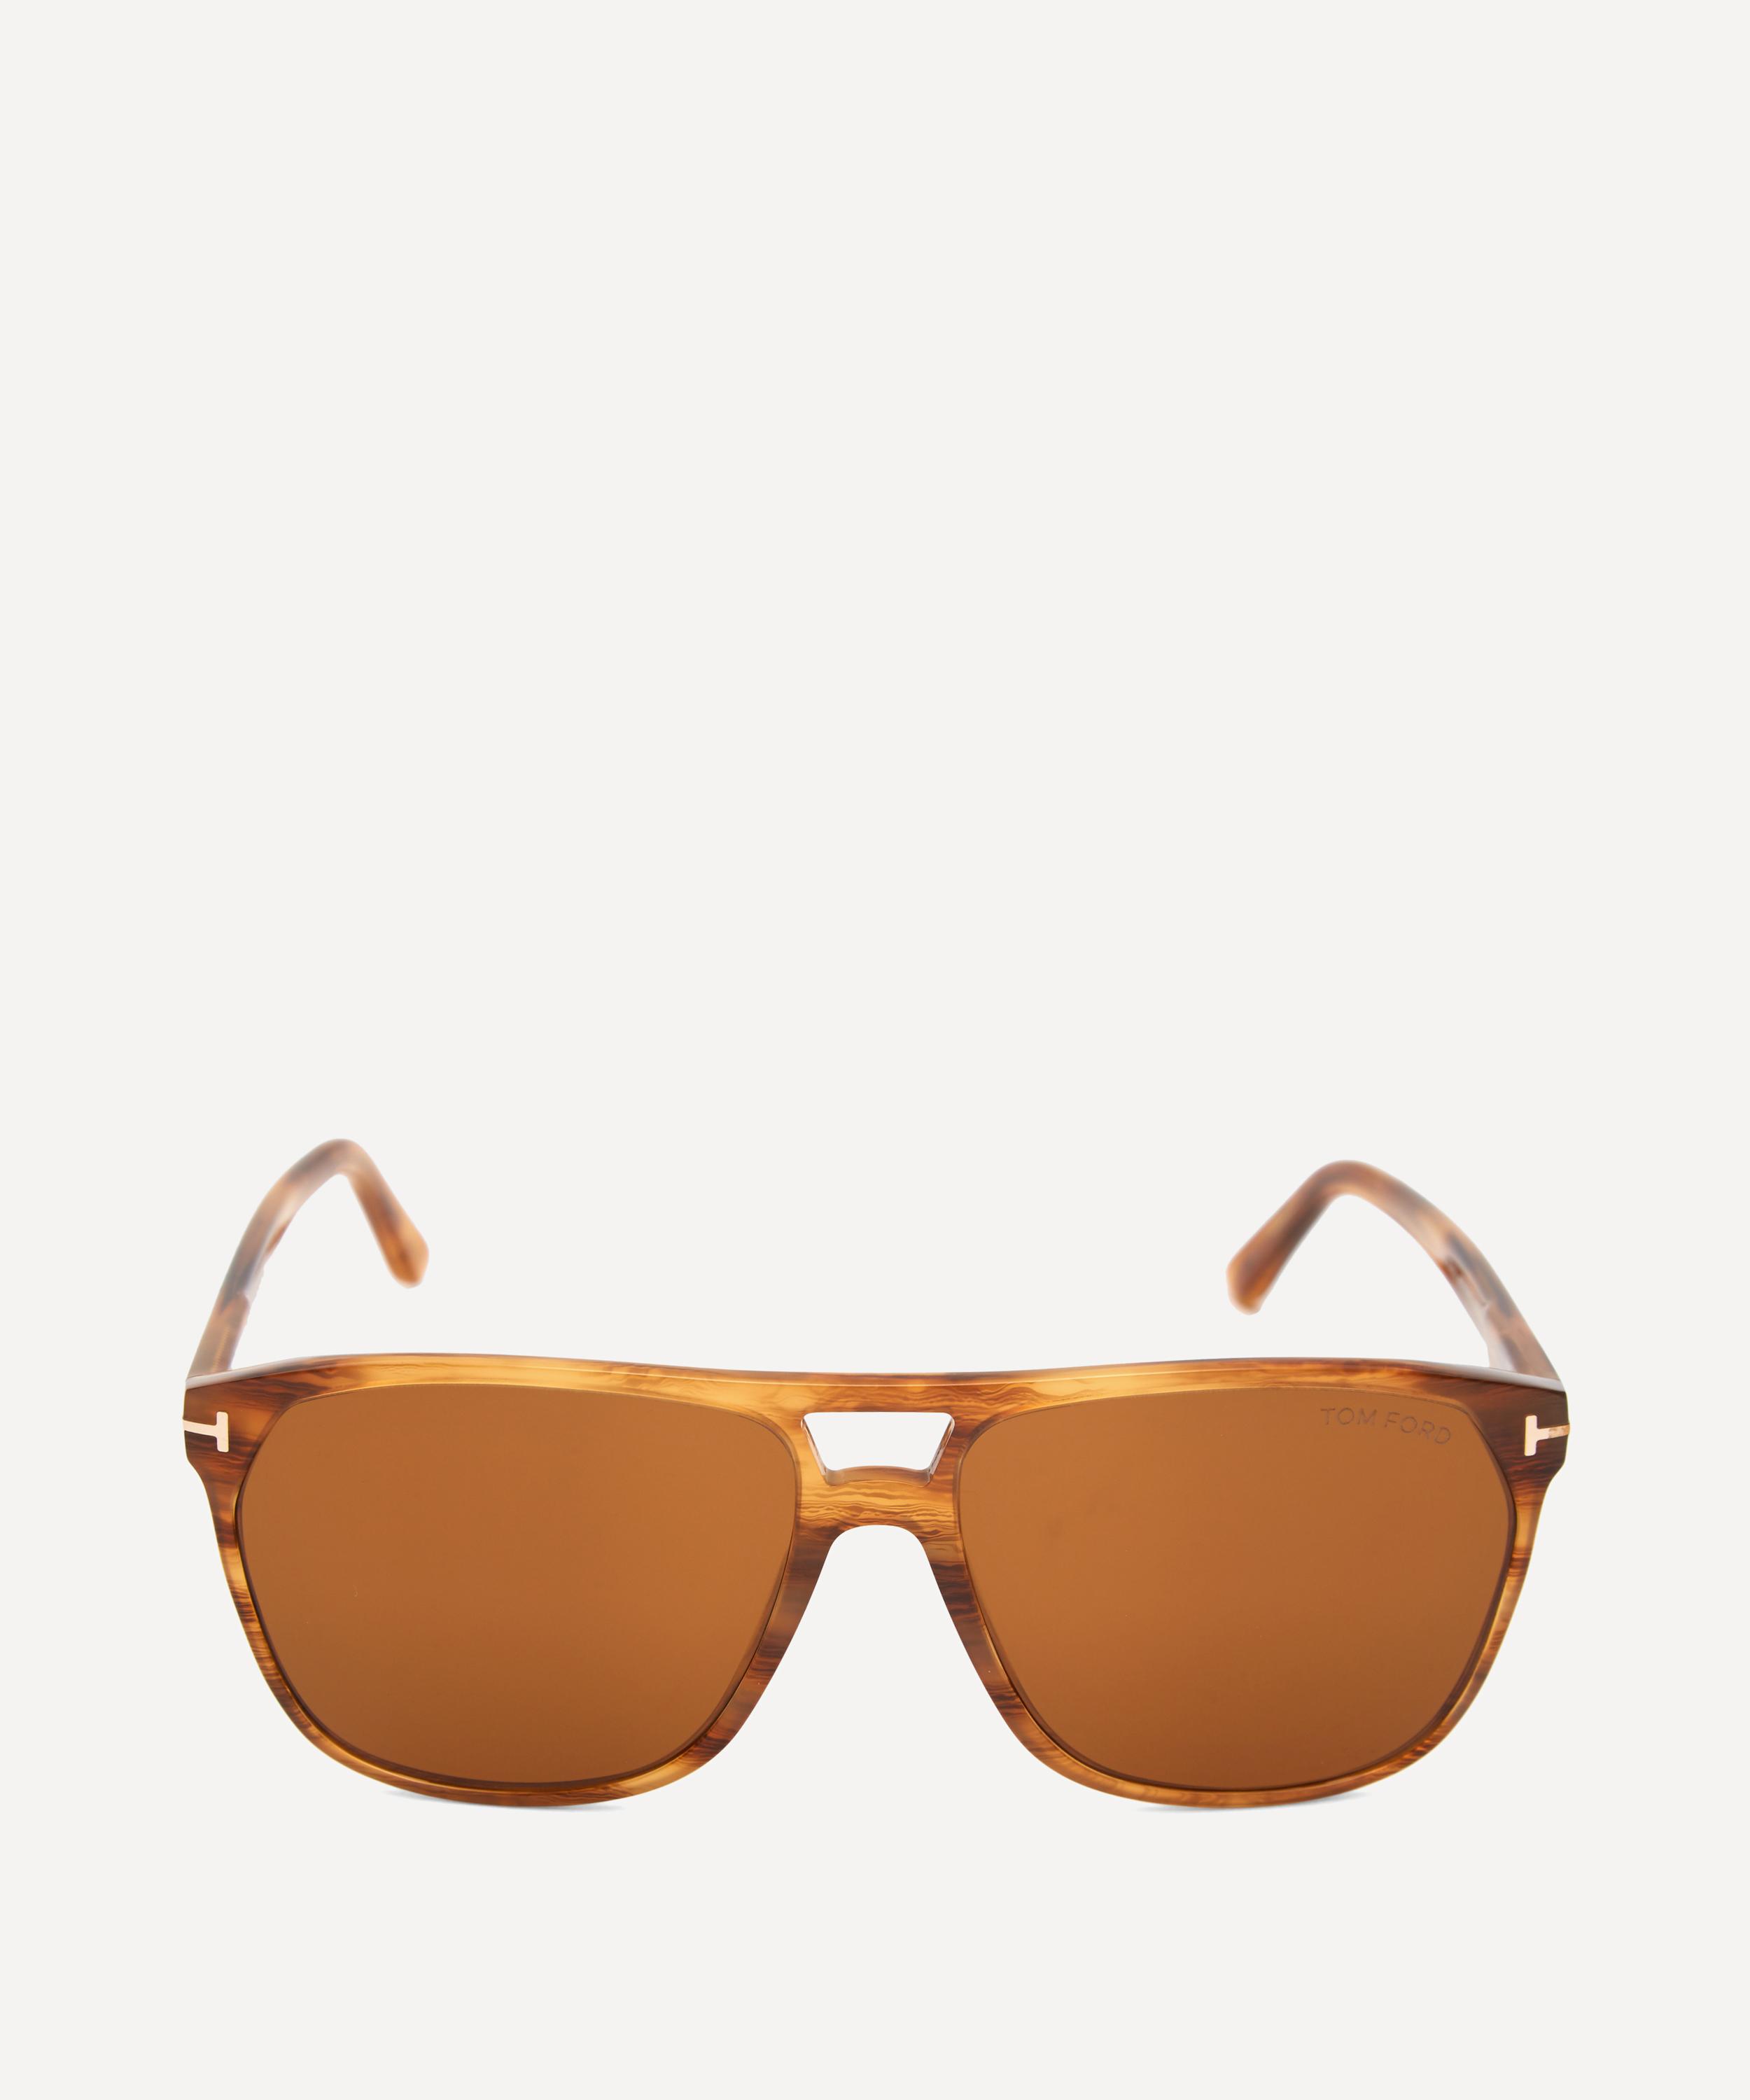 Tom Ford Square Acetate Double Bridge Sunglasses In Shiny Light Brown